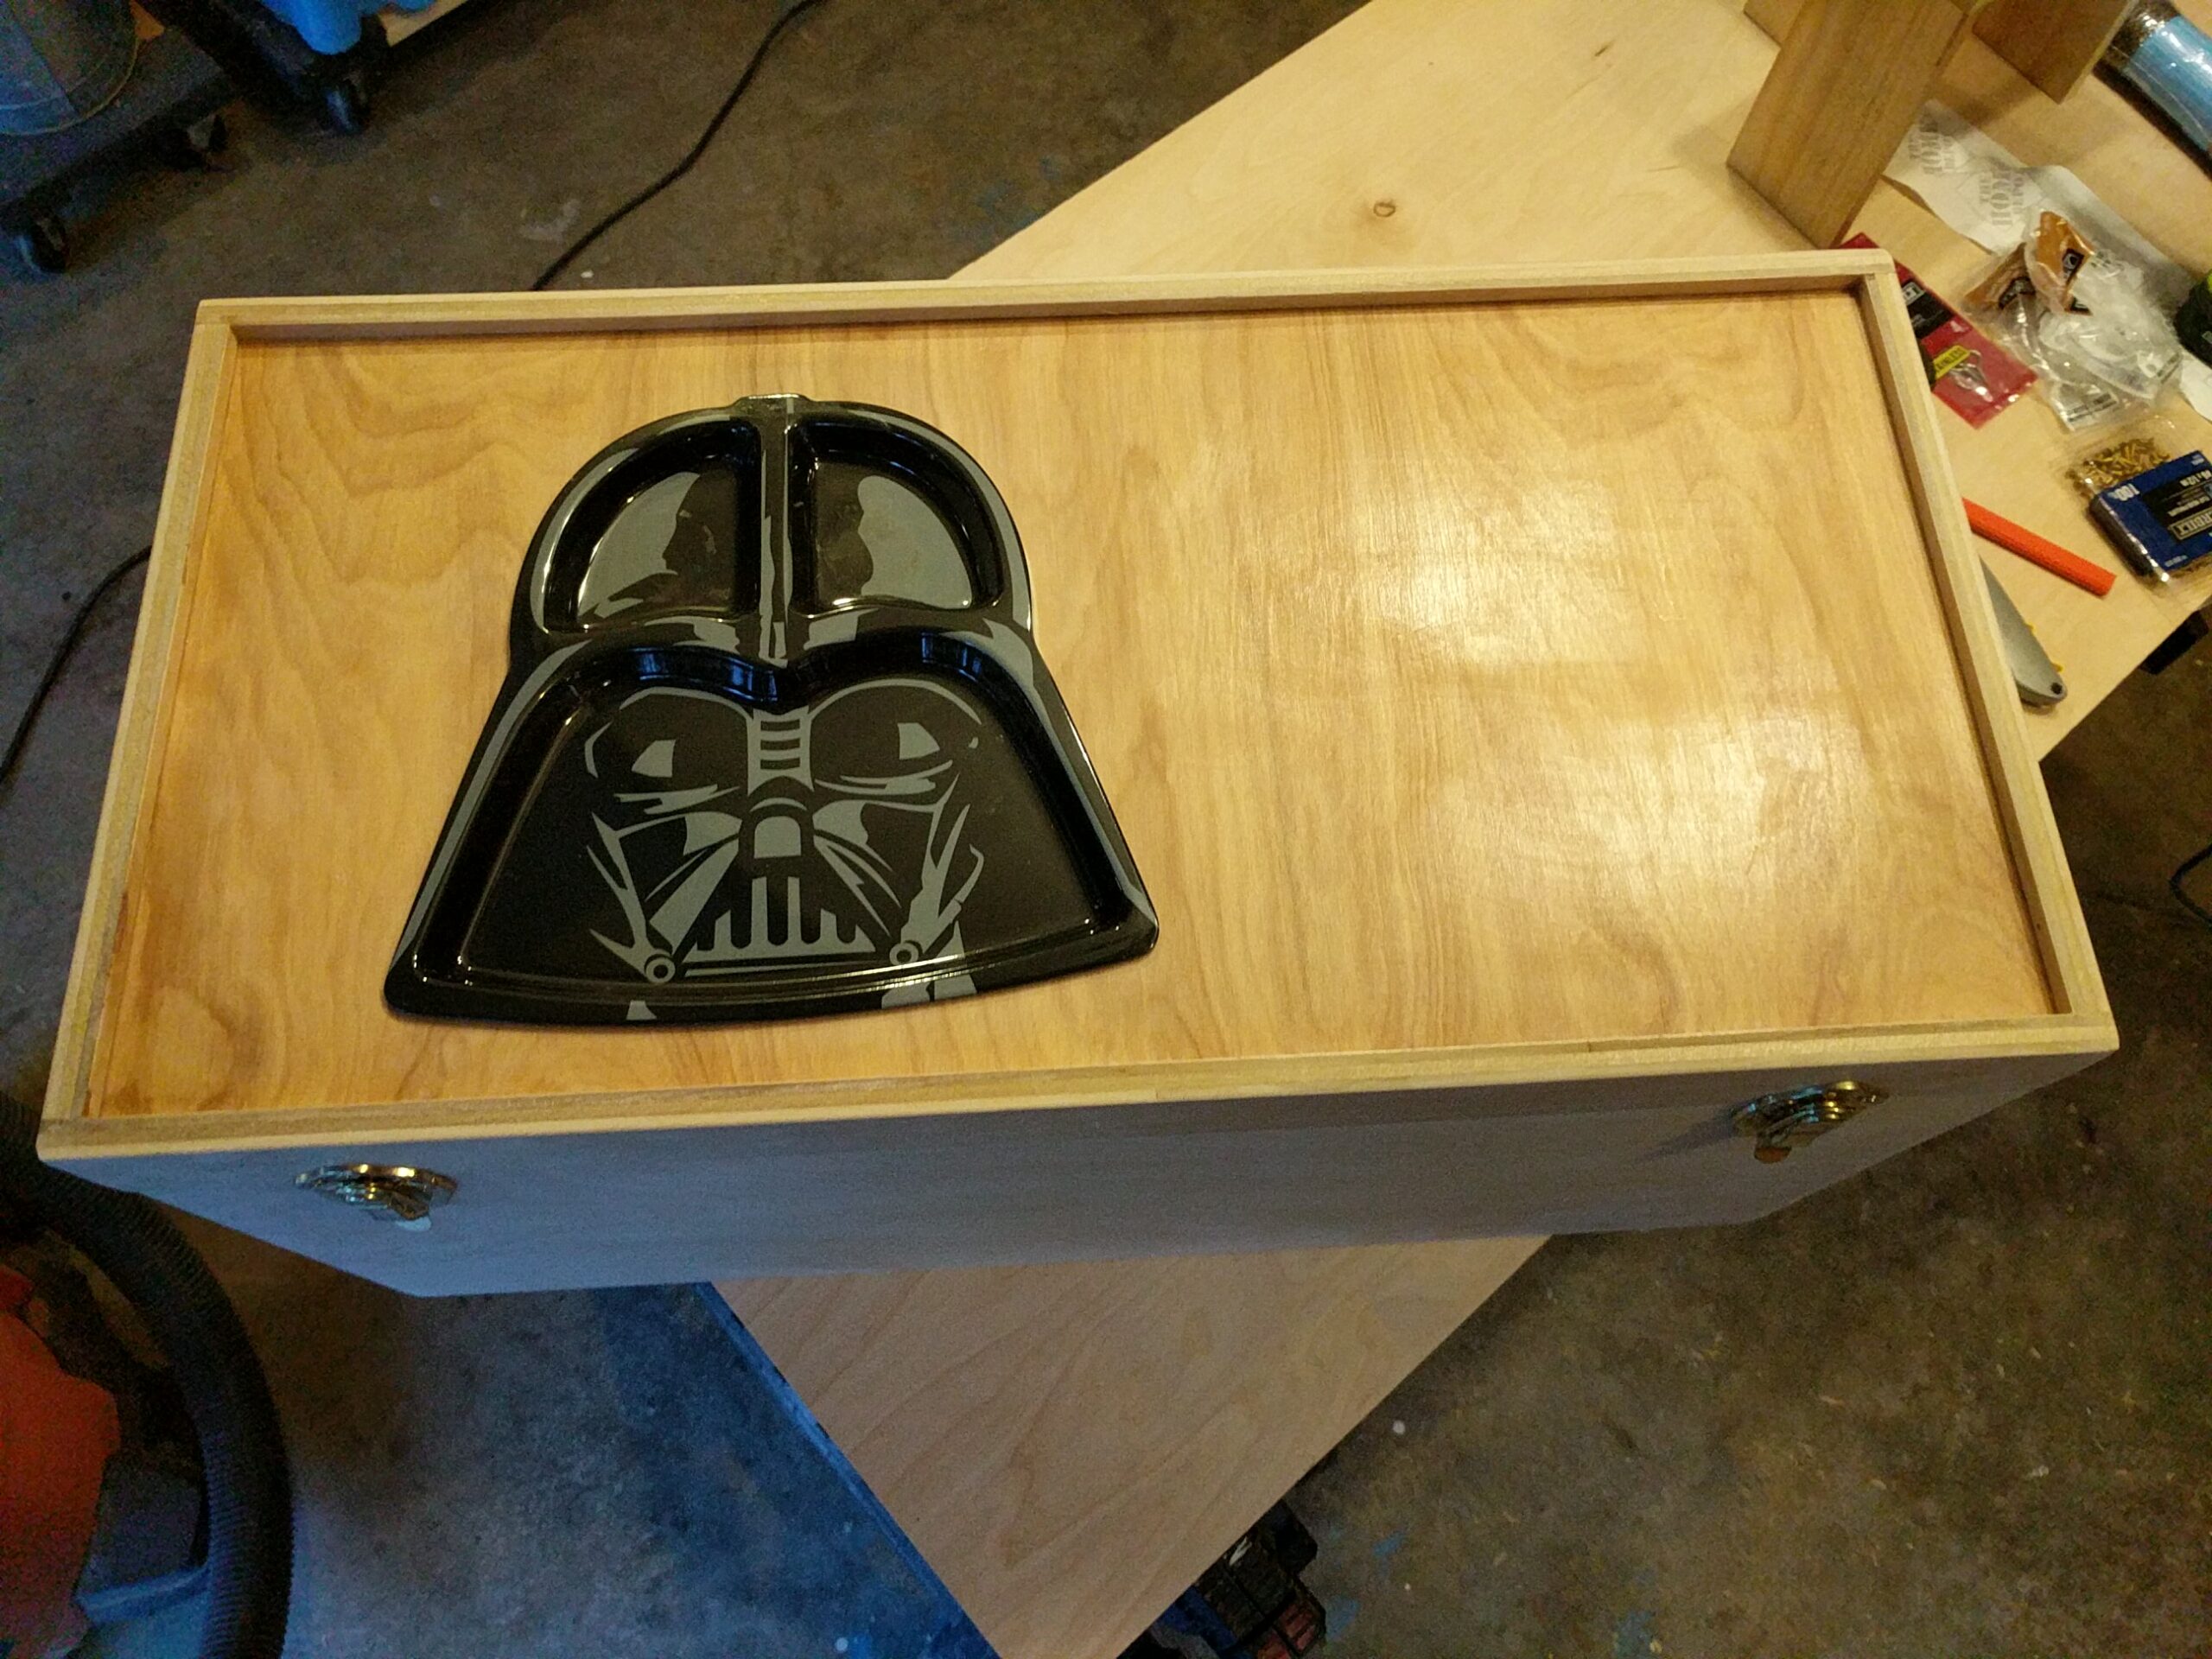 Death Star footlocker with Darth Vader plate